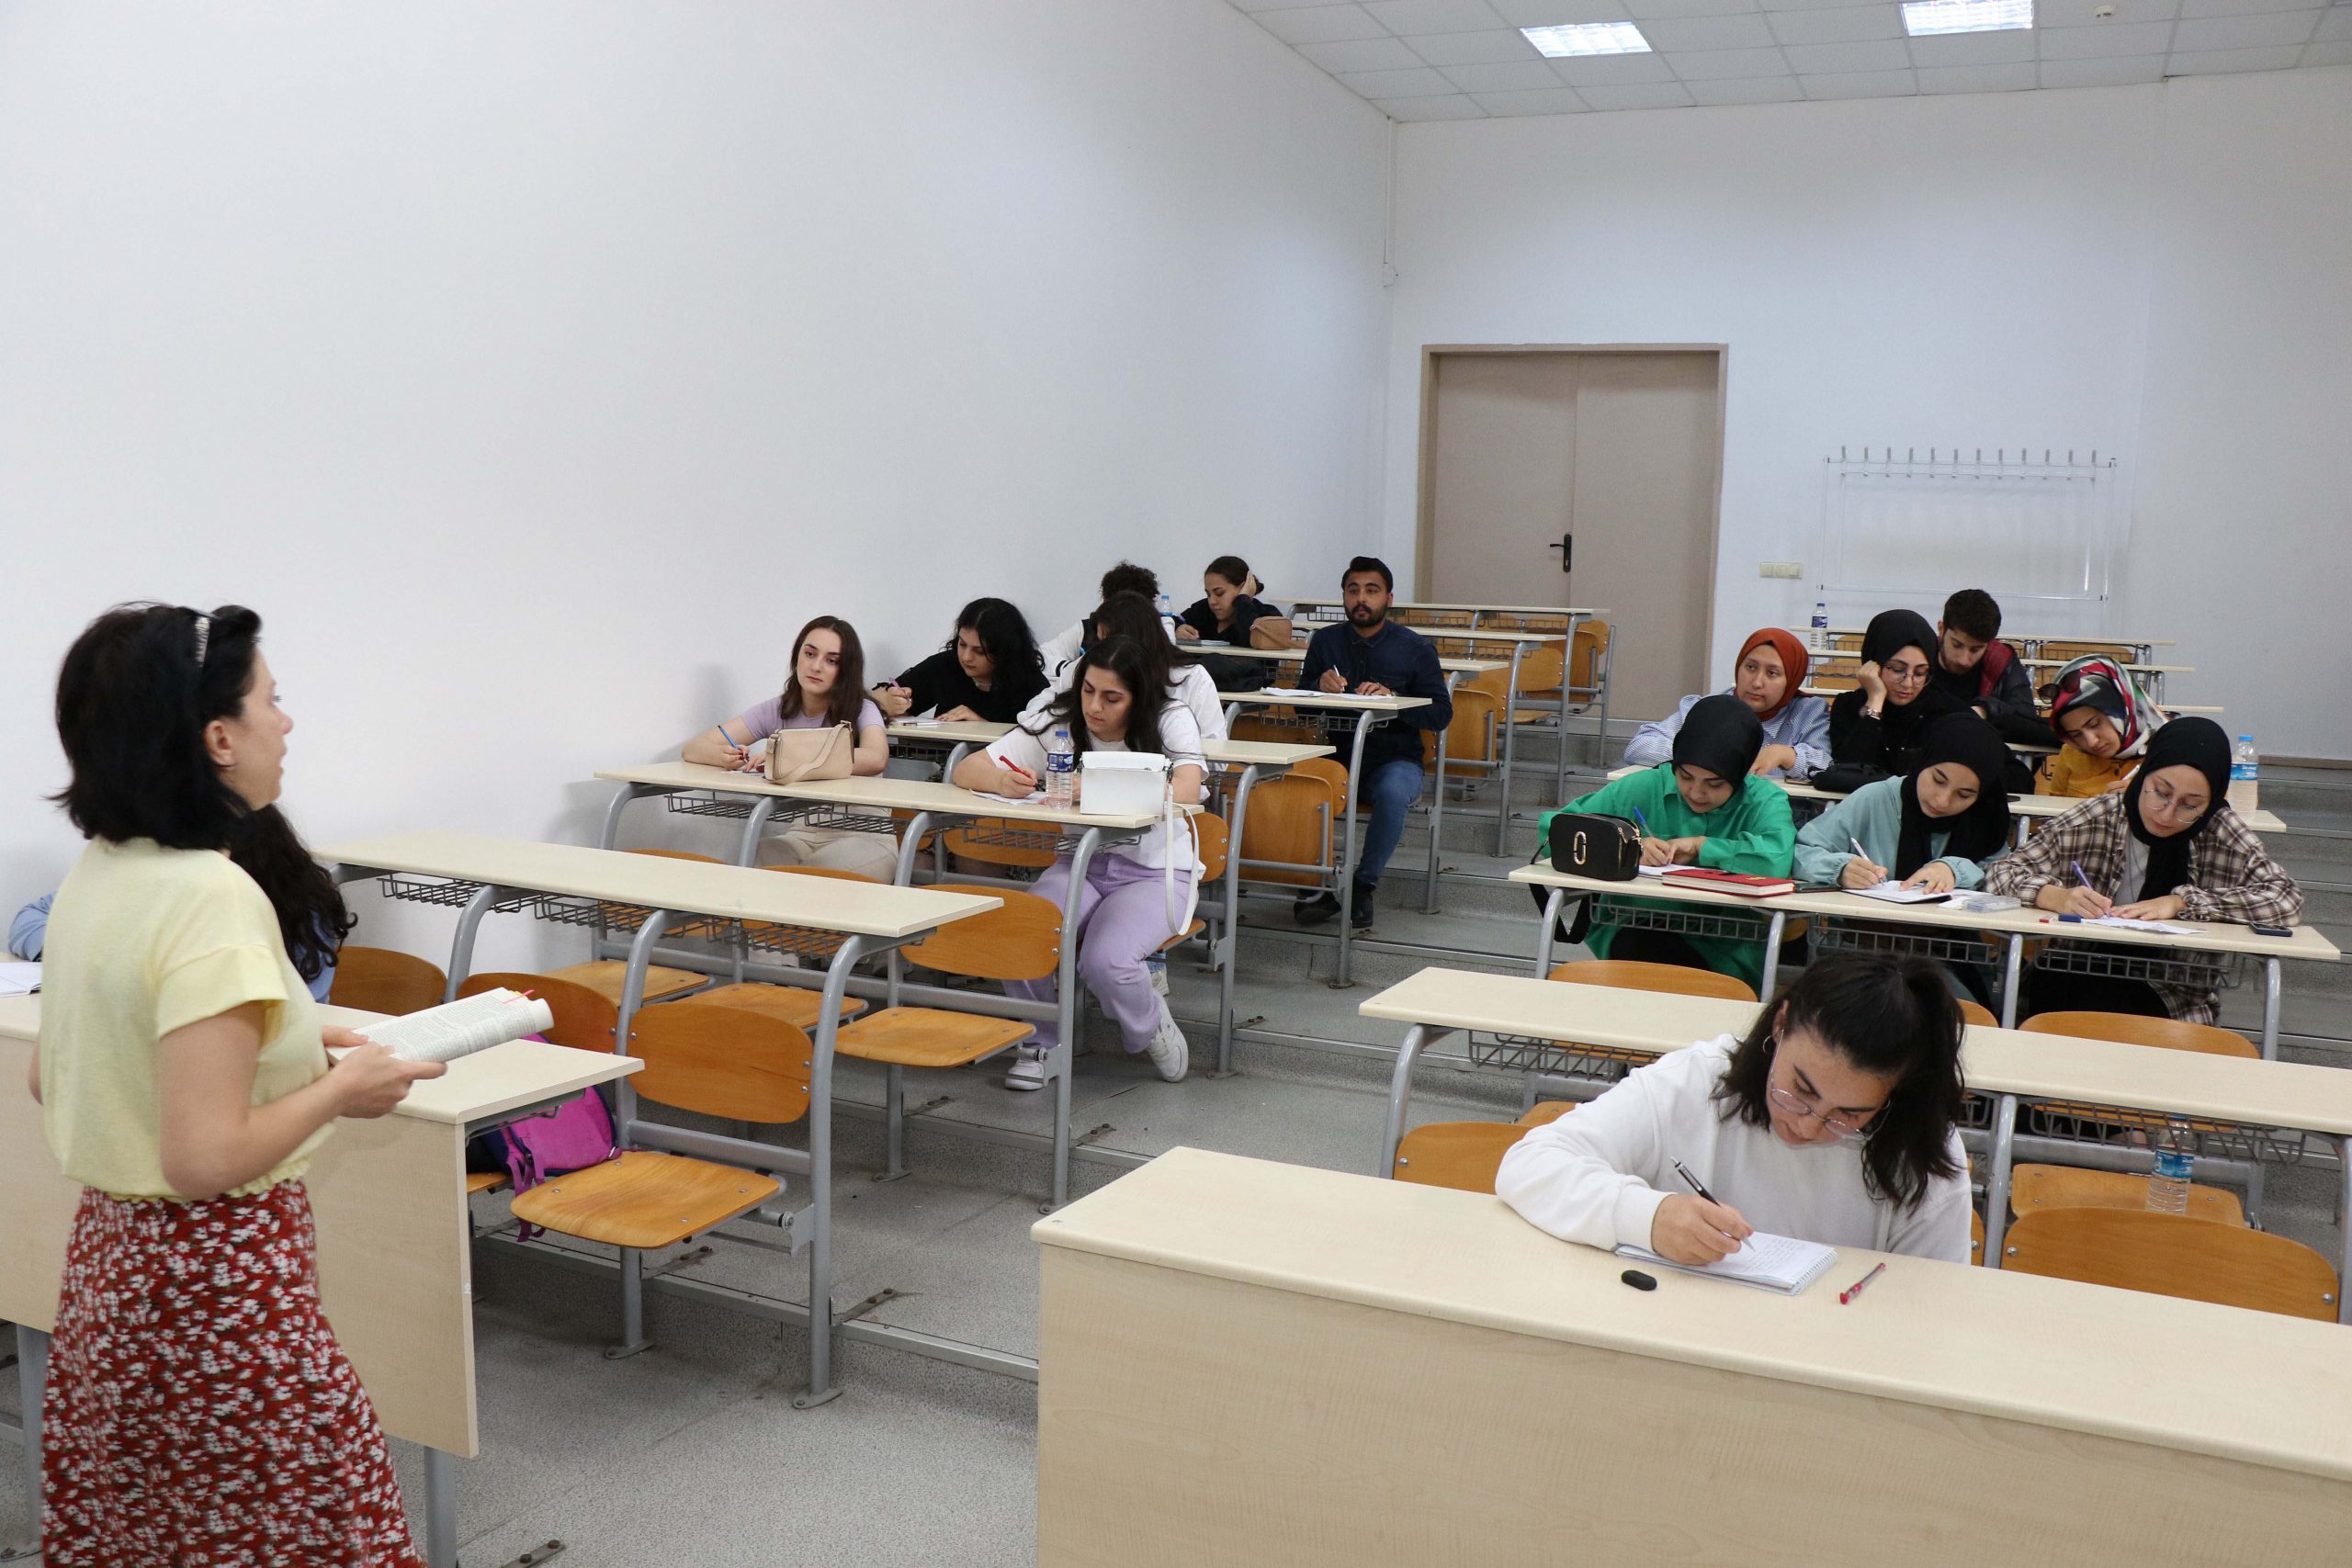 sinop universitesi find and study 11 - Sinop Üniversitesi